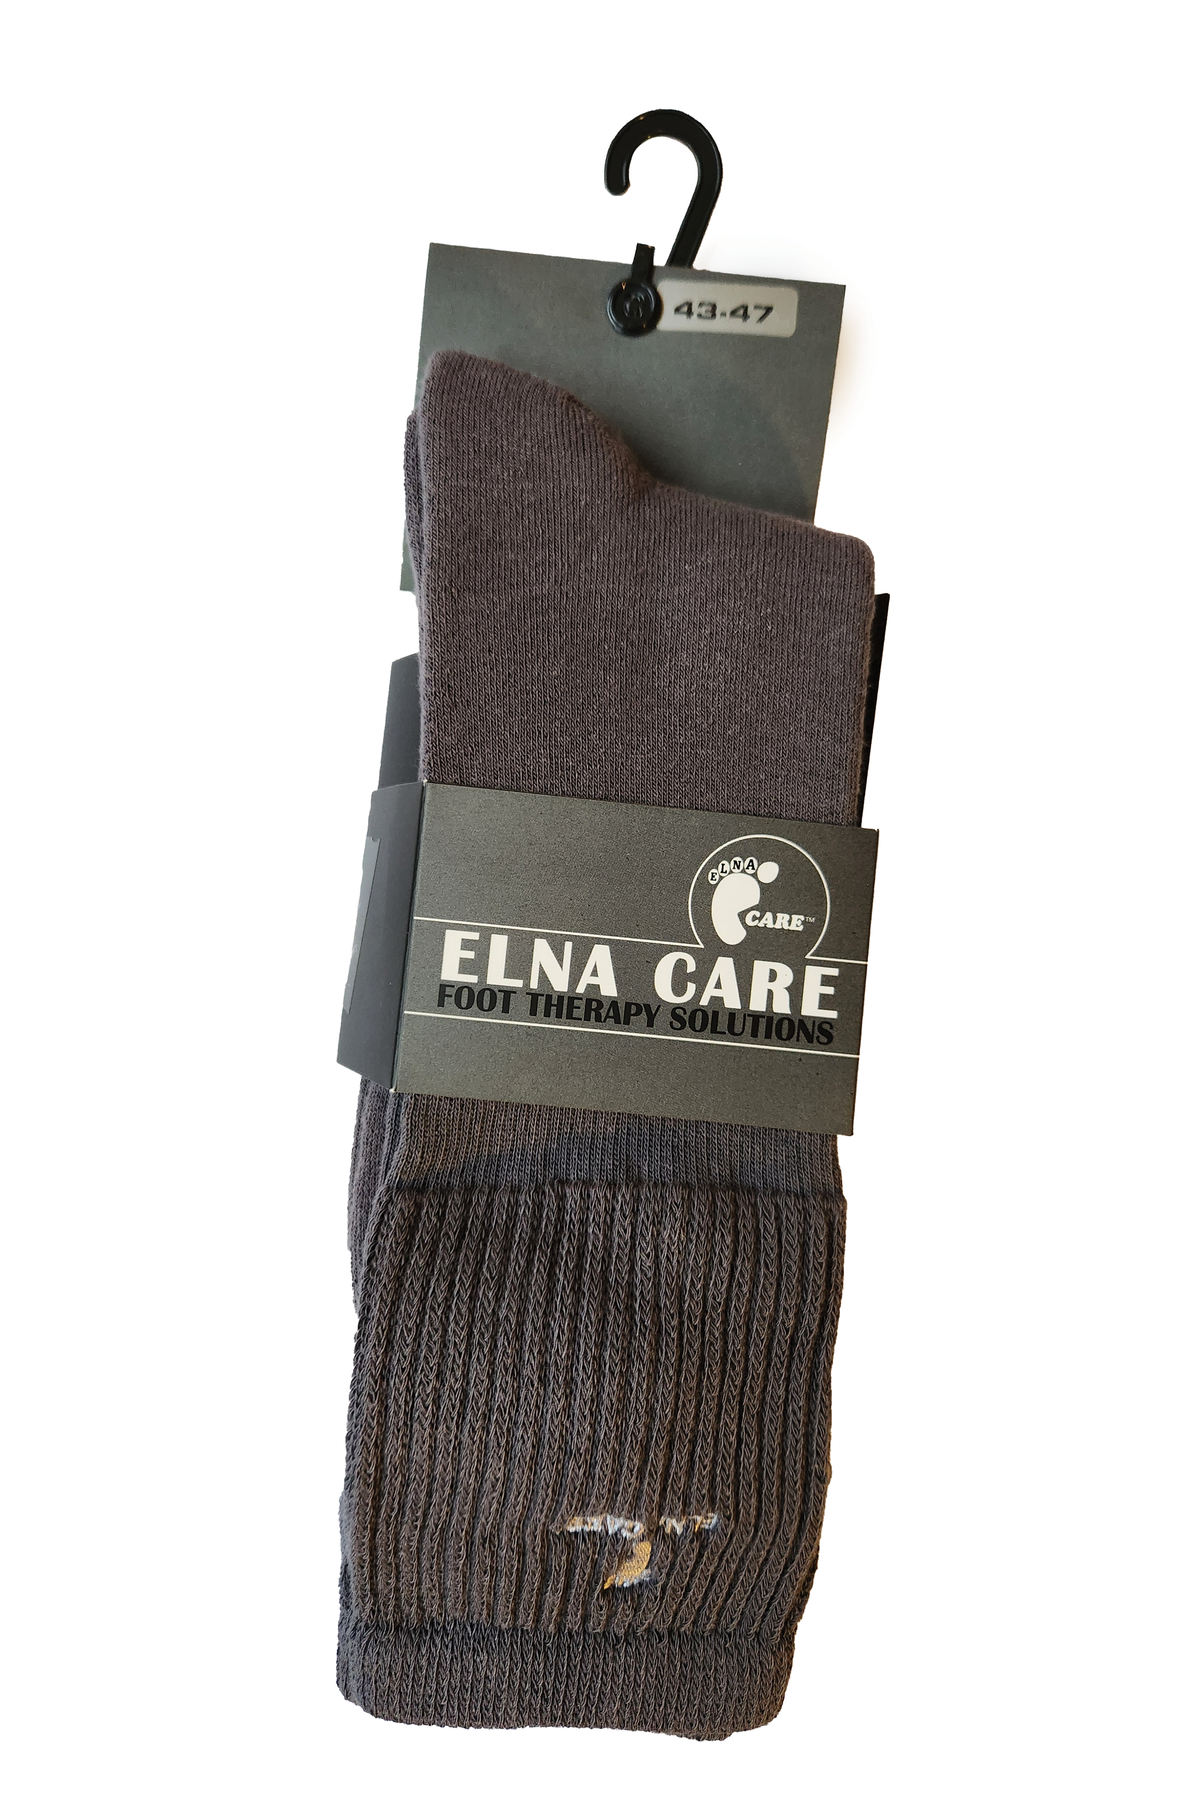 Elna Care Socks - Silver Version